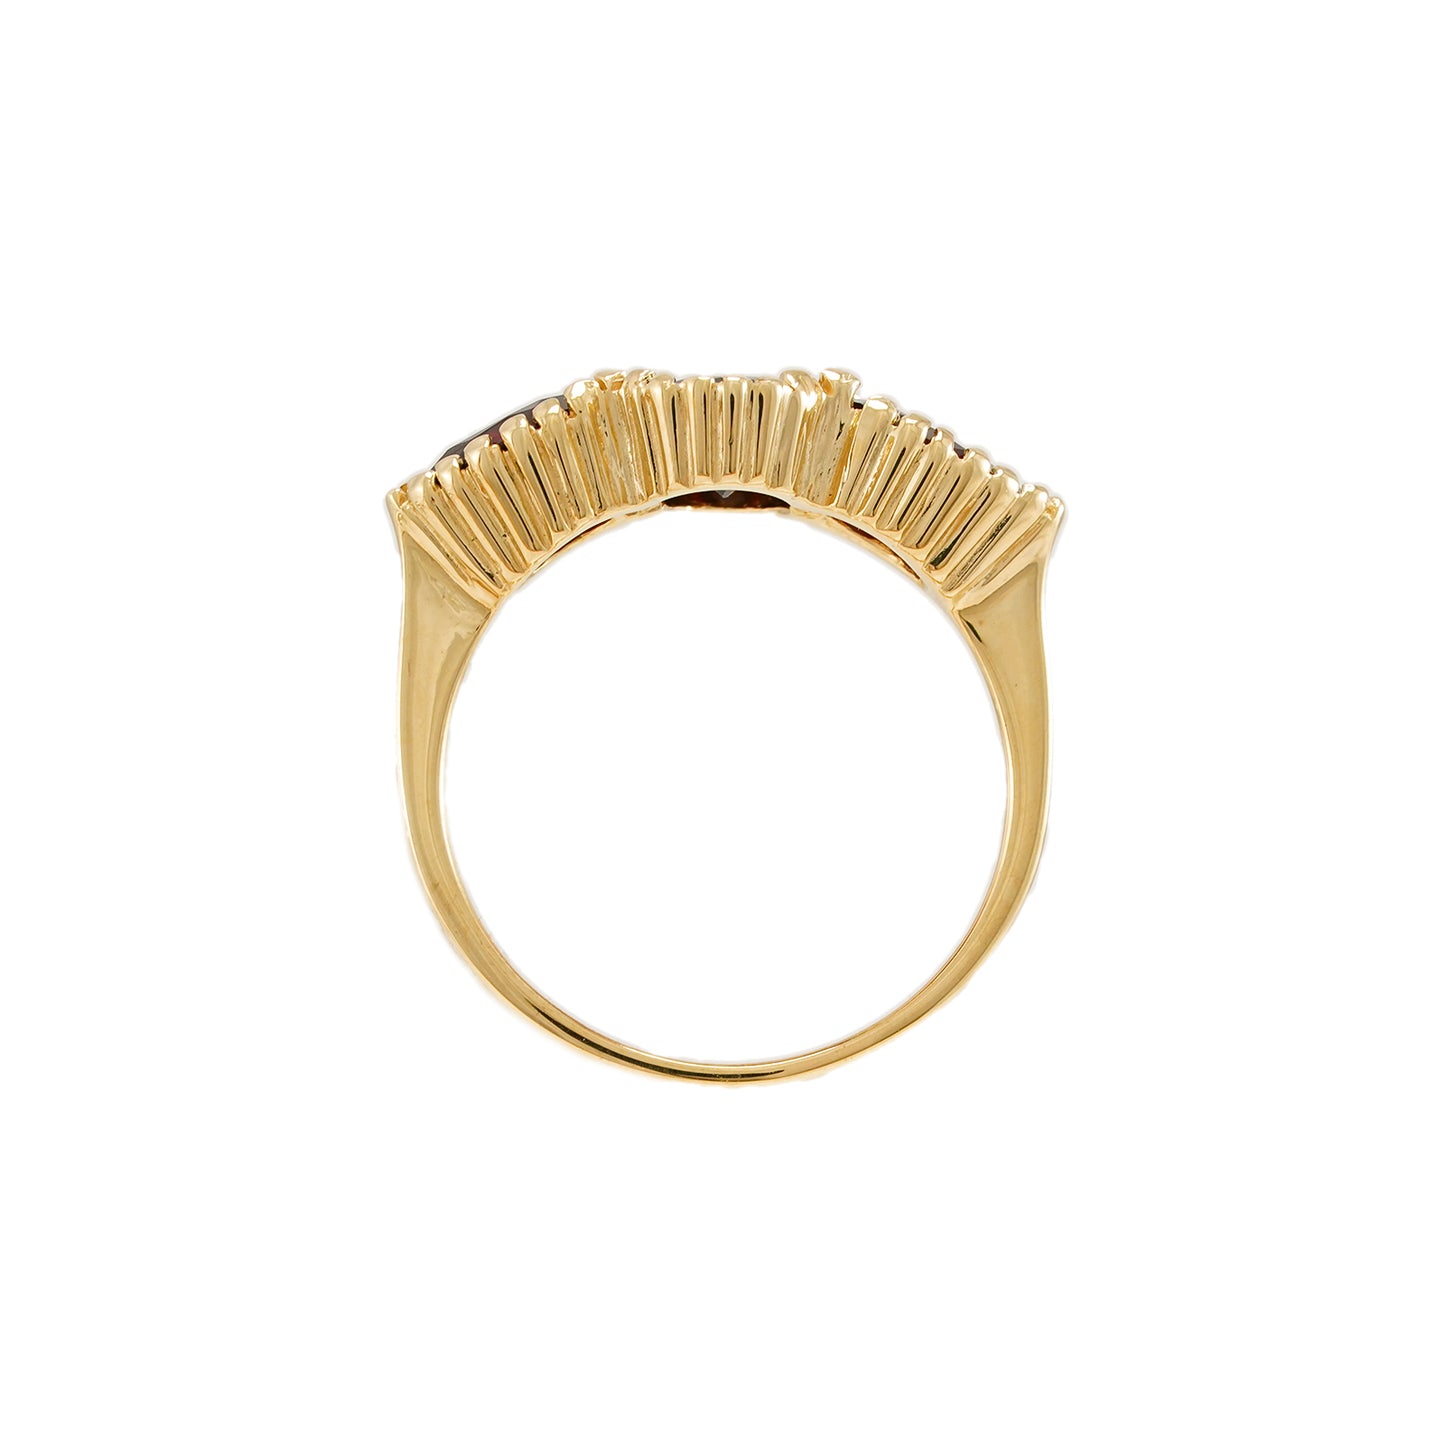 Edelstein Ring Vintage Granat Gelbgold 14K Damenschmuck Goldring Damenring